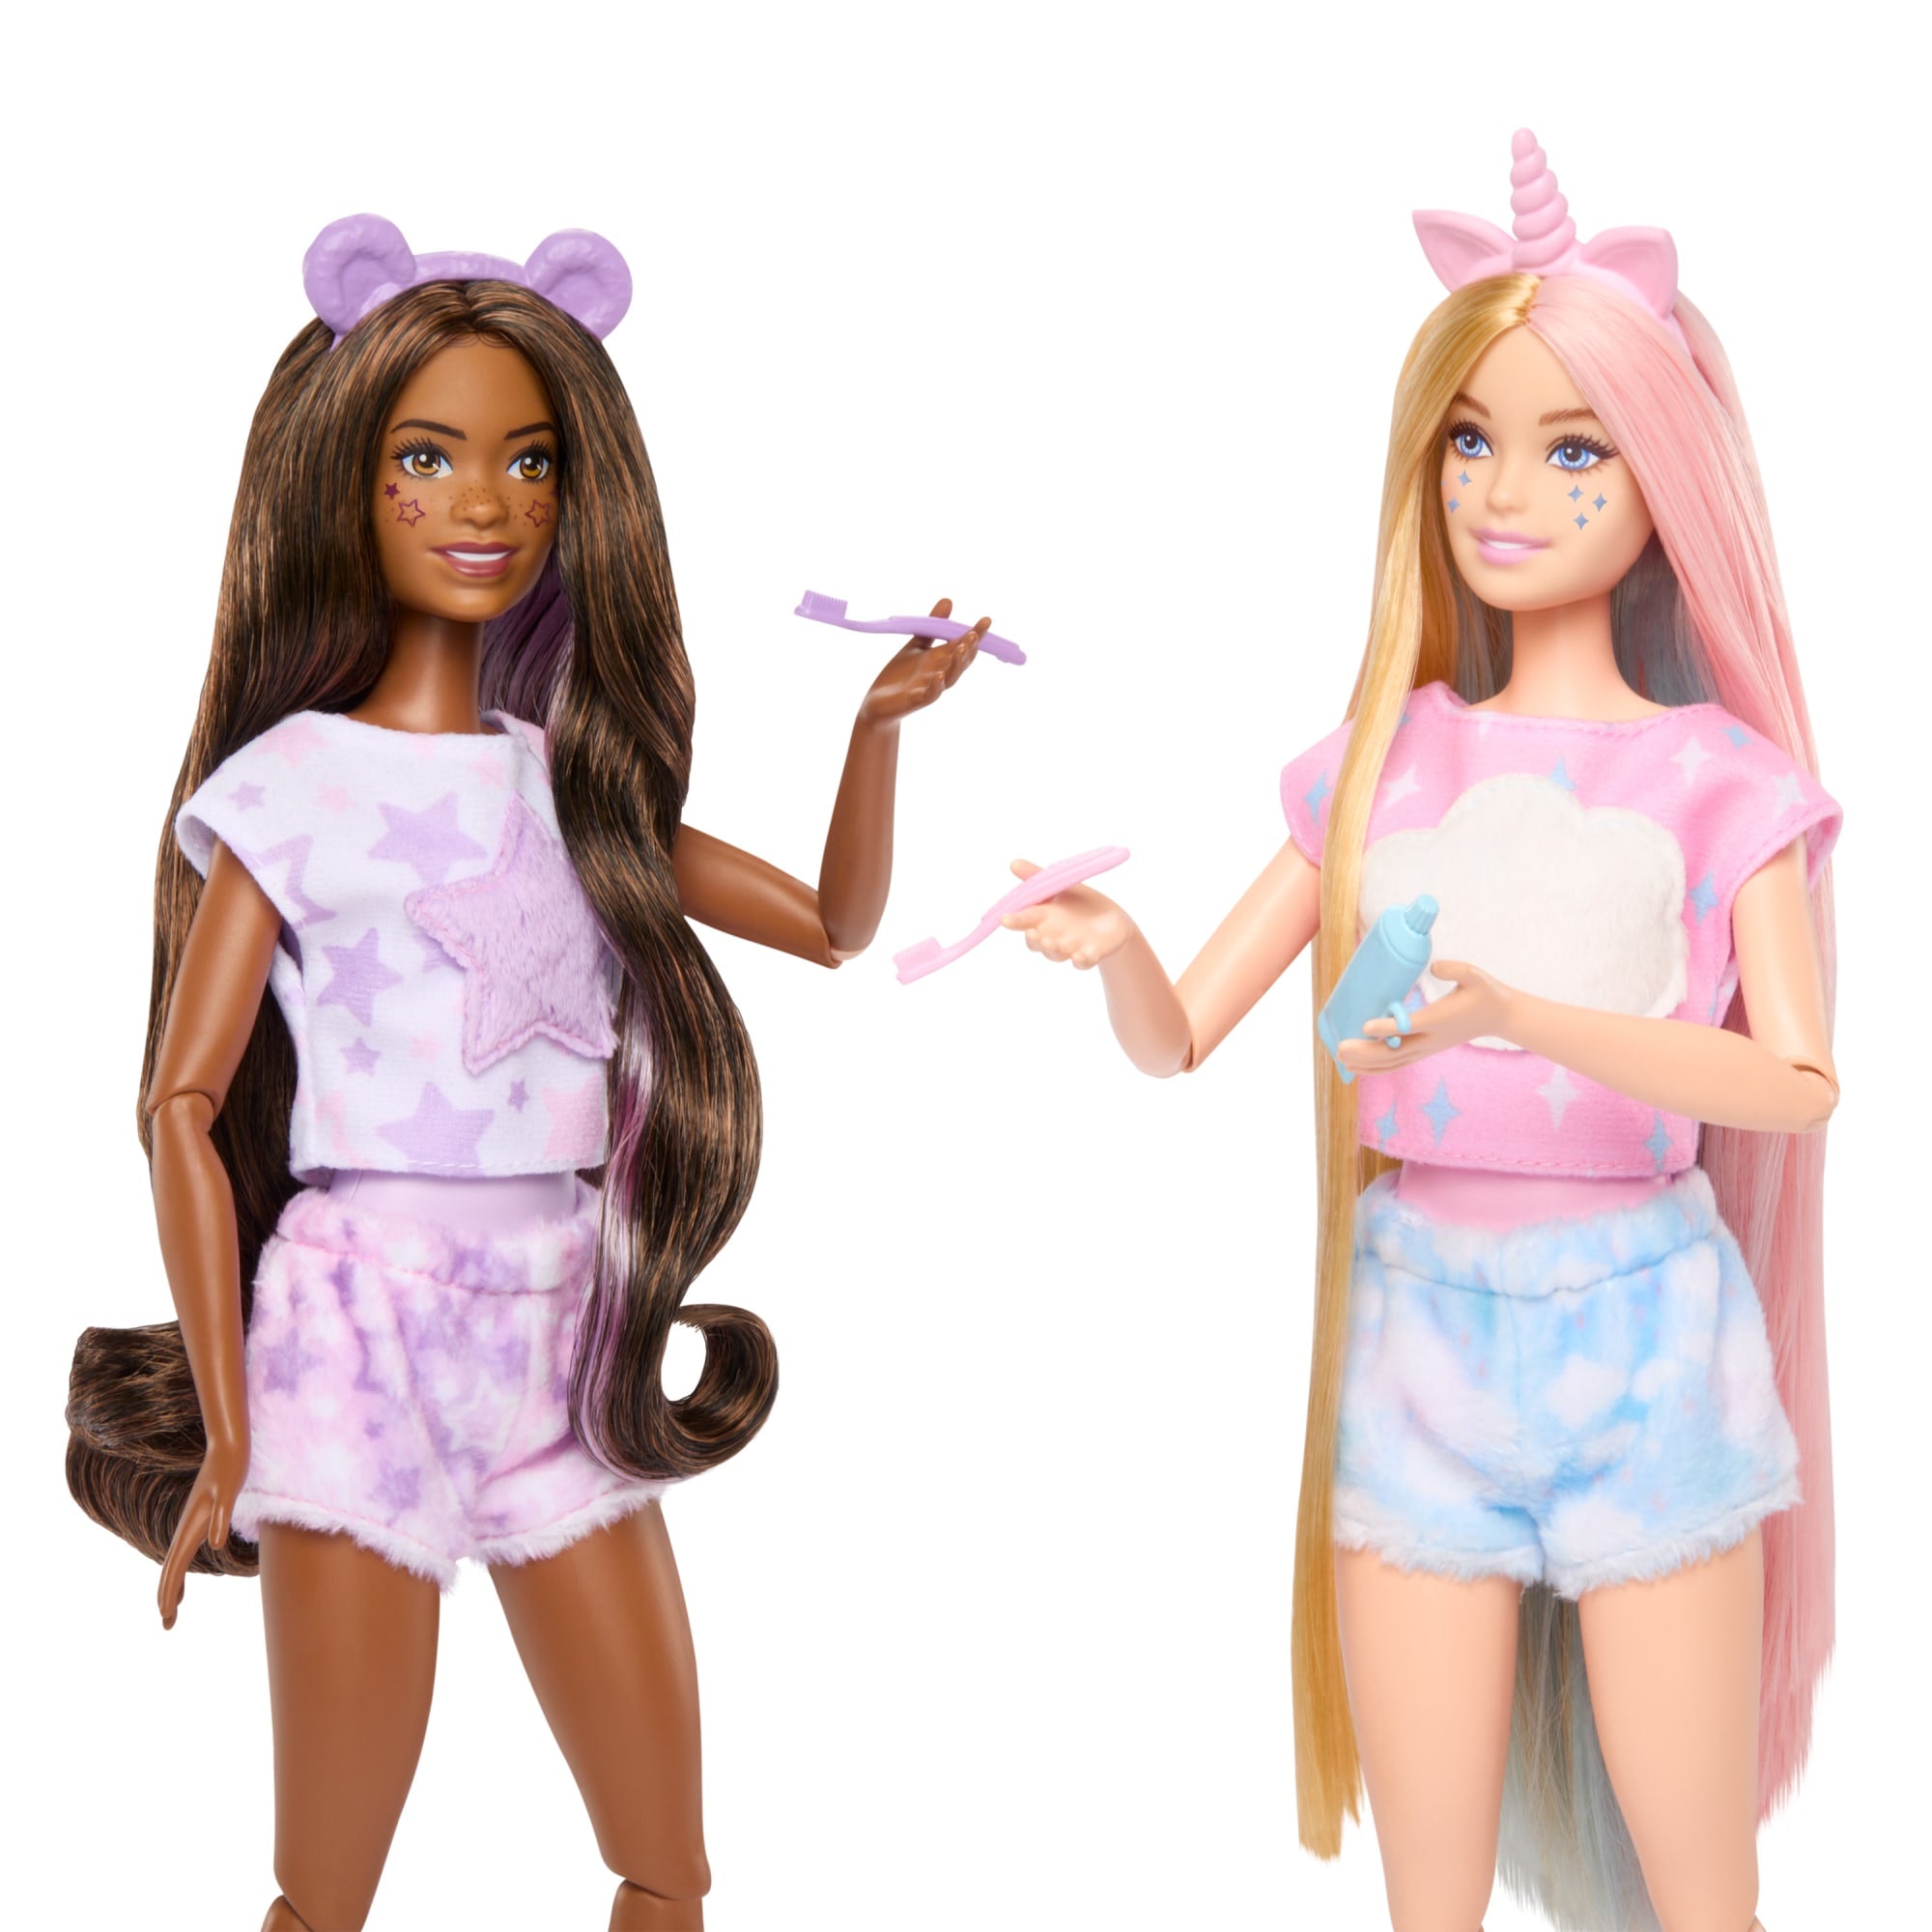 Mattel Barbie Color Reveal Slumber Party Set